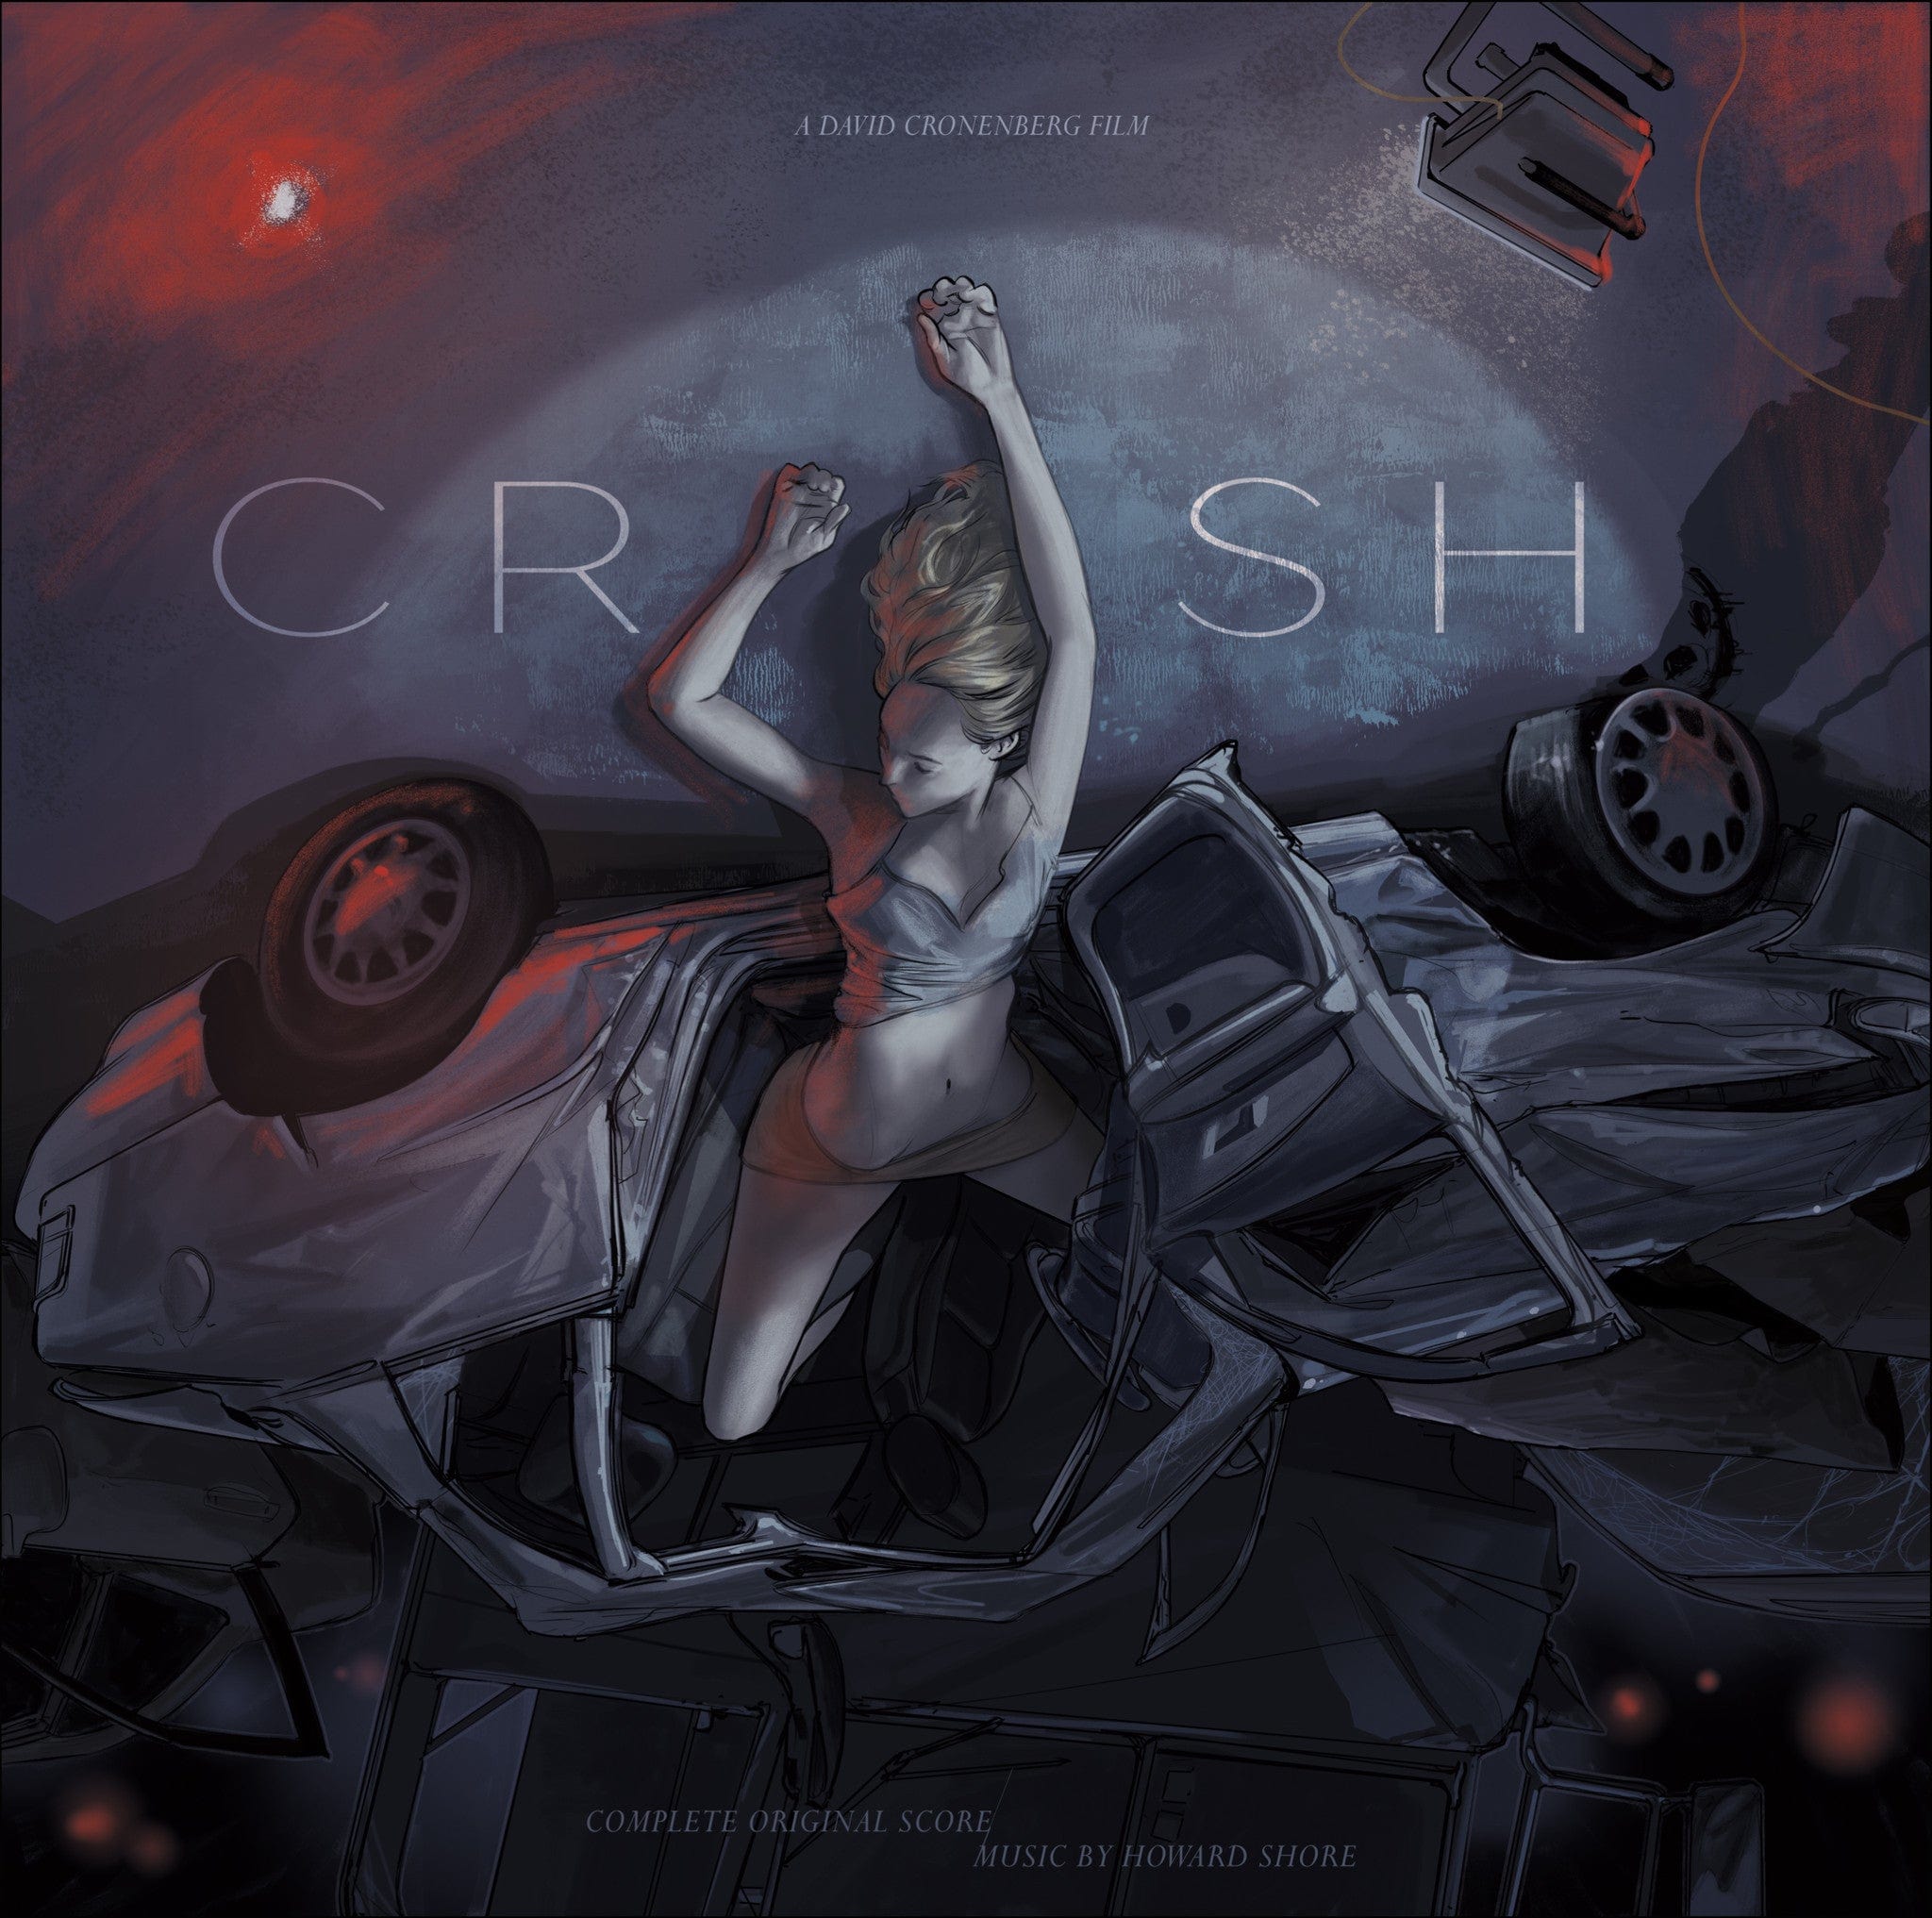 Crash (1996), Cinemorgue Wiki